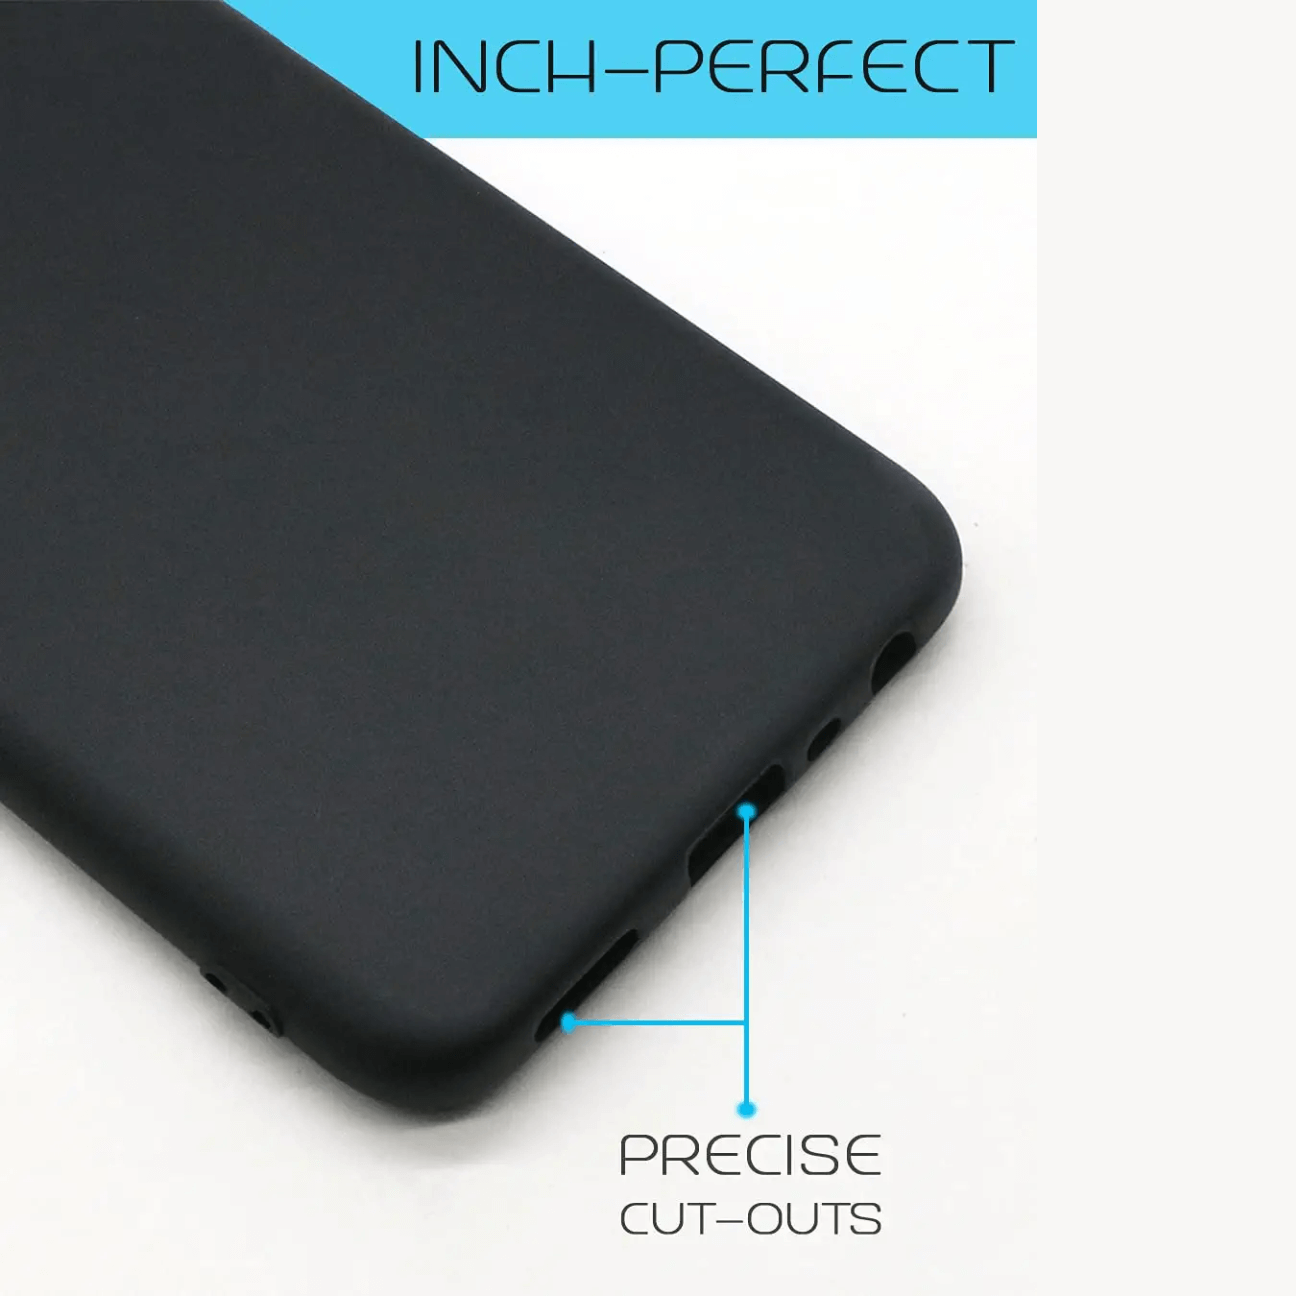 Xiaomi Poco X3 (2020) Black Soft Silicone Phone Case